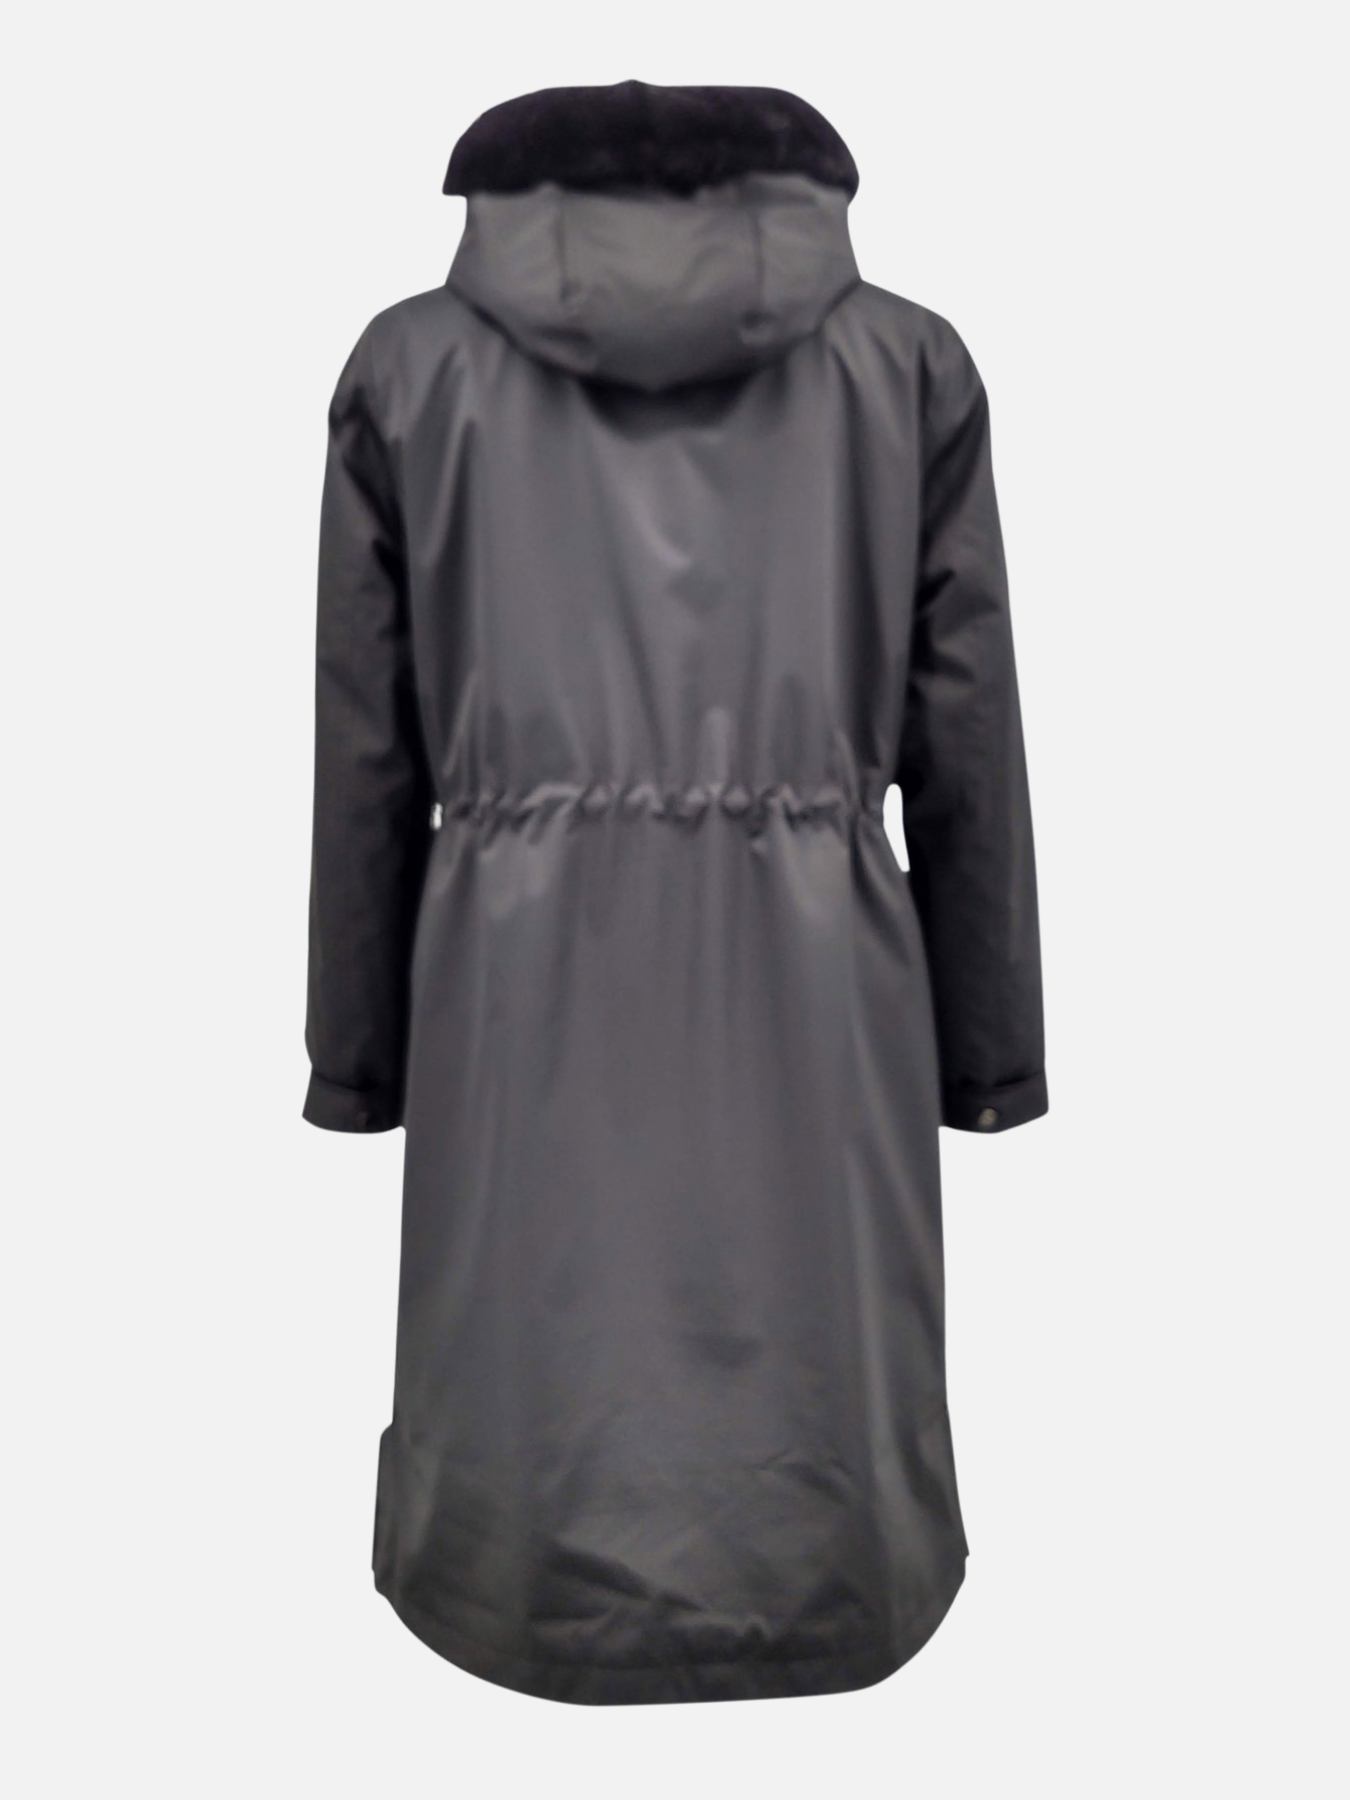 DPW98111-3, 97 cm. - Hood - Textile - Mink - Women - Black / Dunjakke / Mink Pels - Levinsky - Kvinde